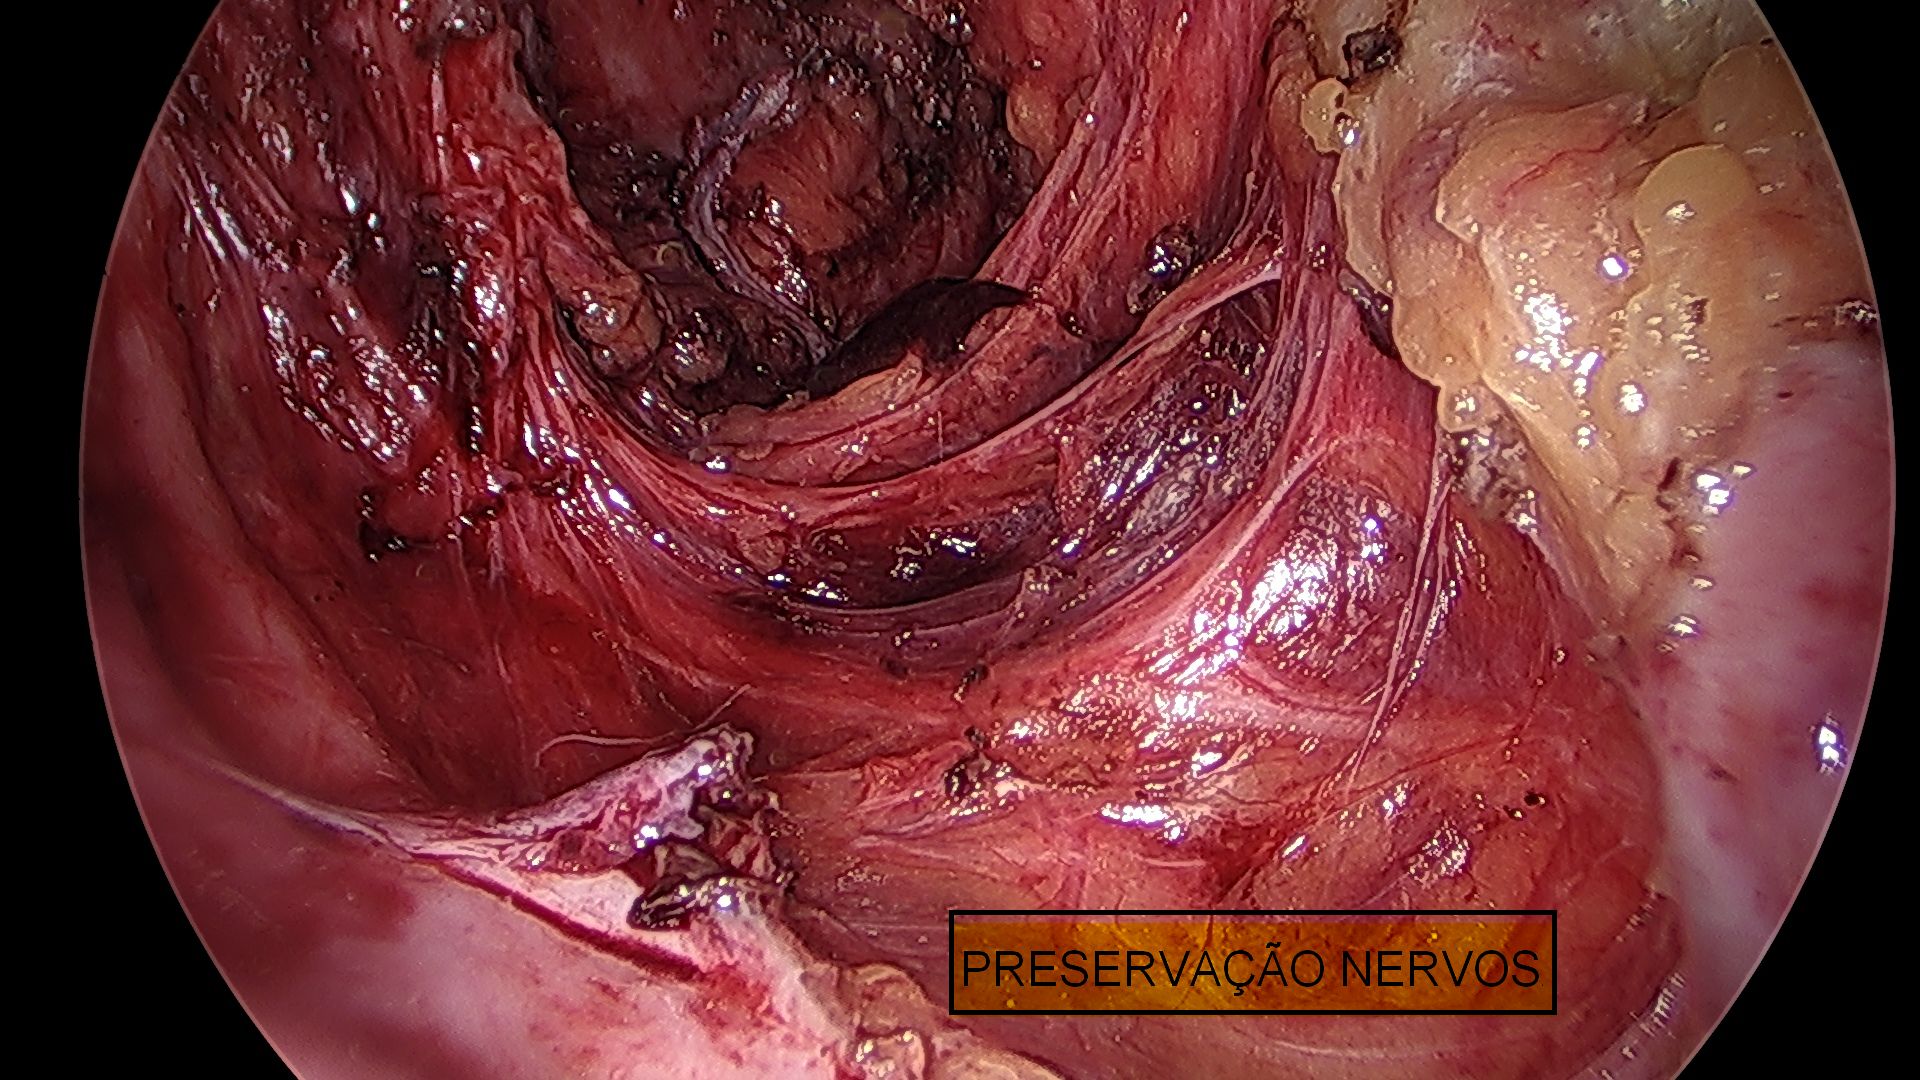 Ooforoplastia laparoscópica e exérese de lesão de endometriose profunda 